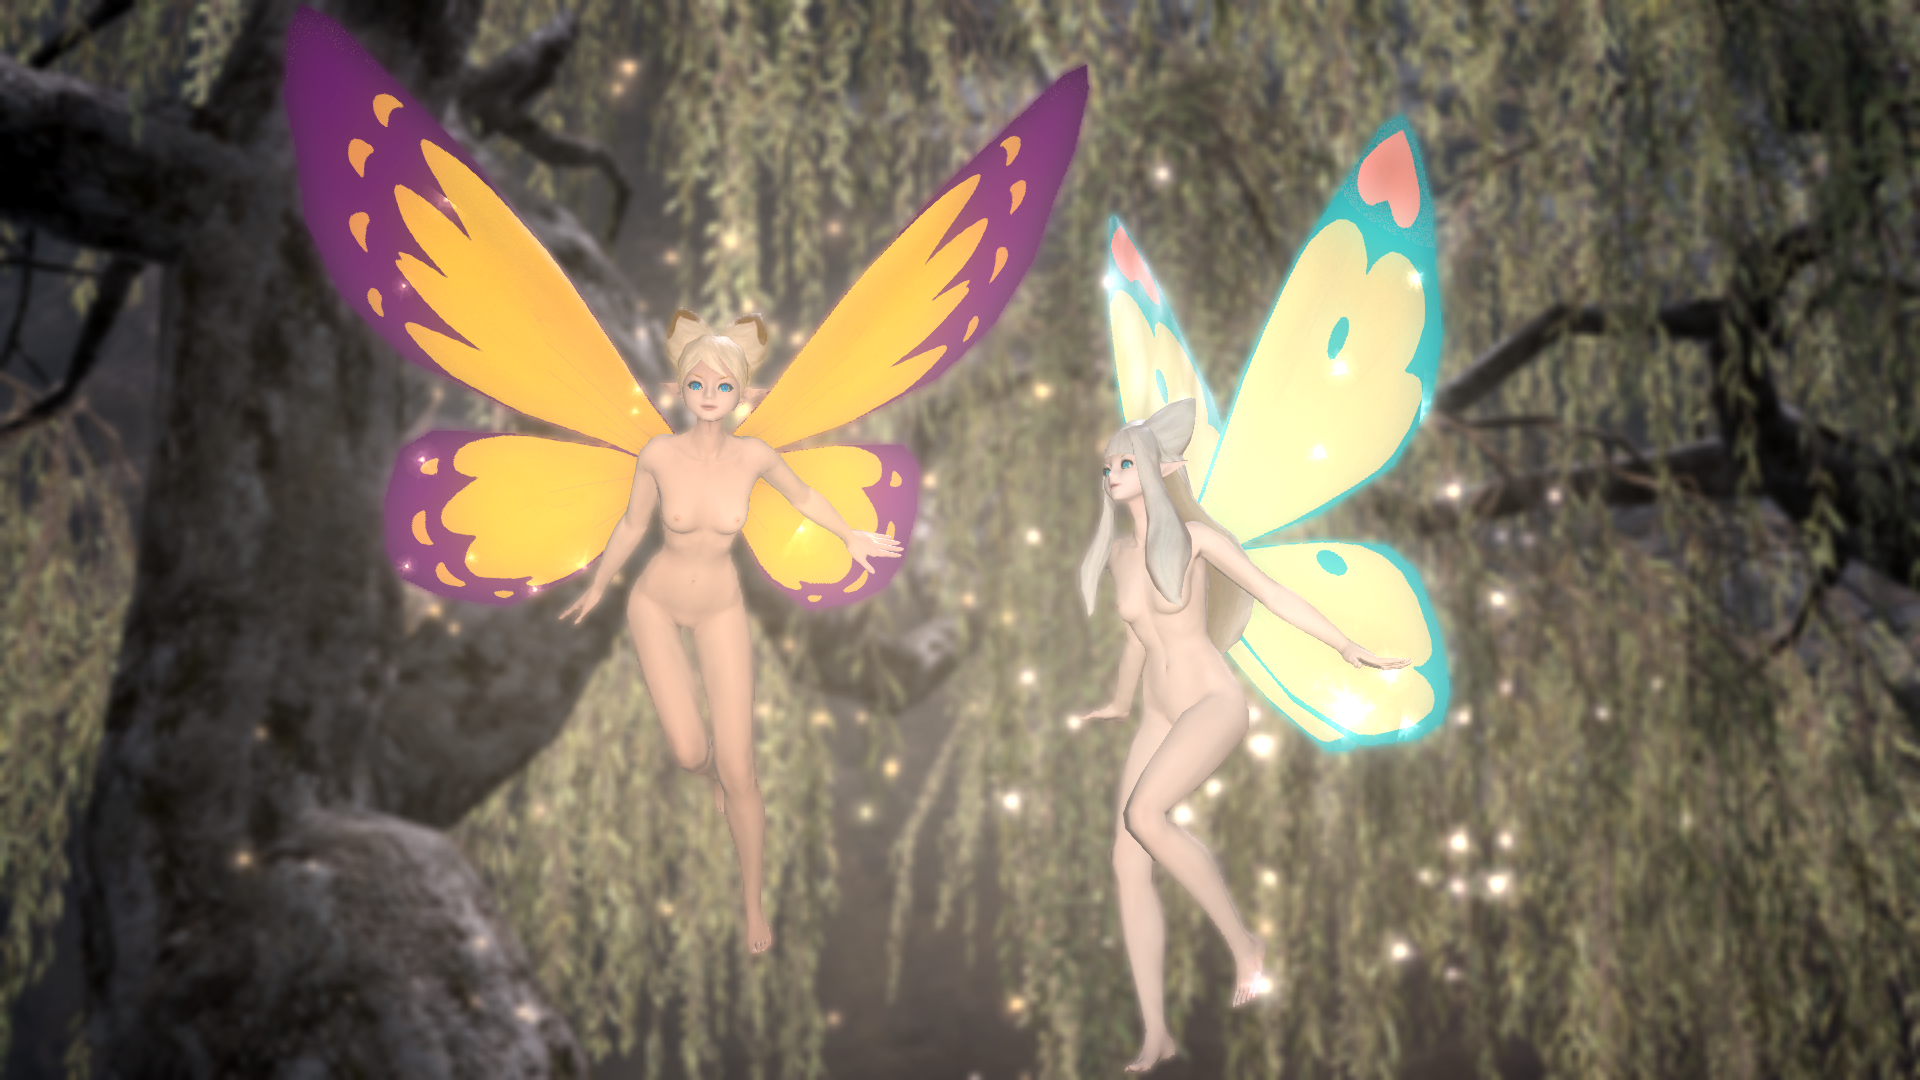 debbie cyr share final fantasy 14 nude patch photos